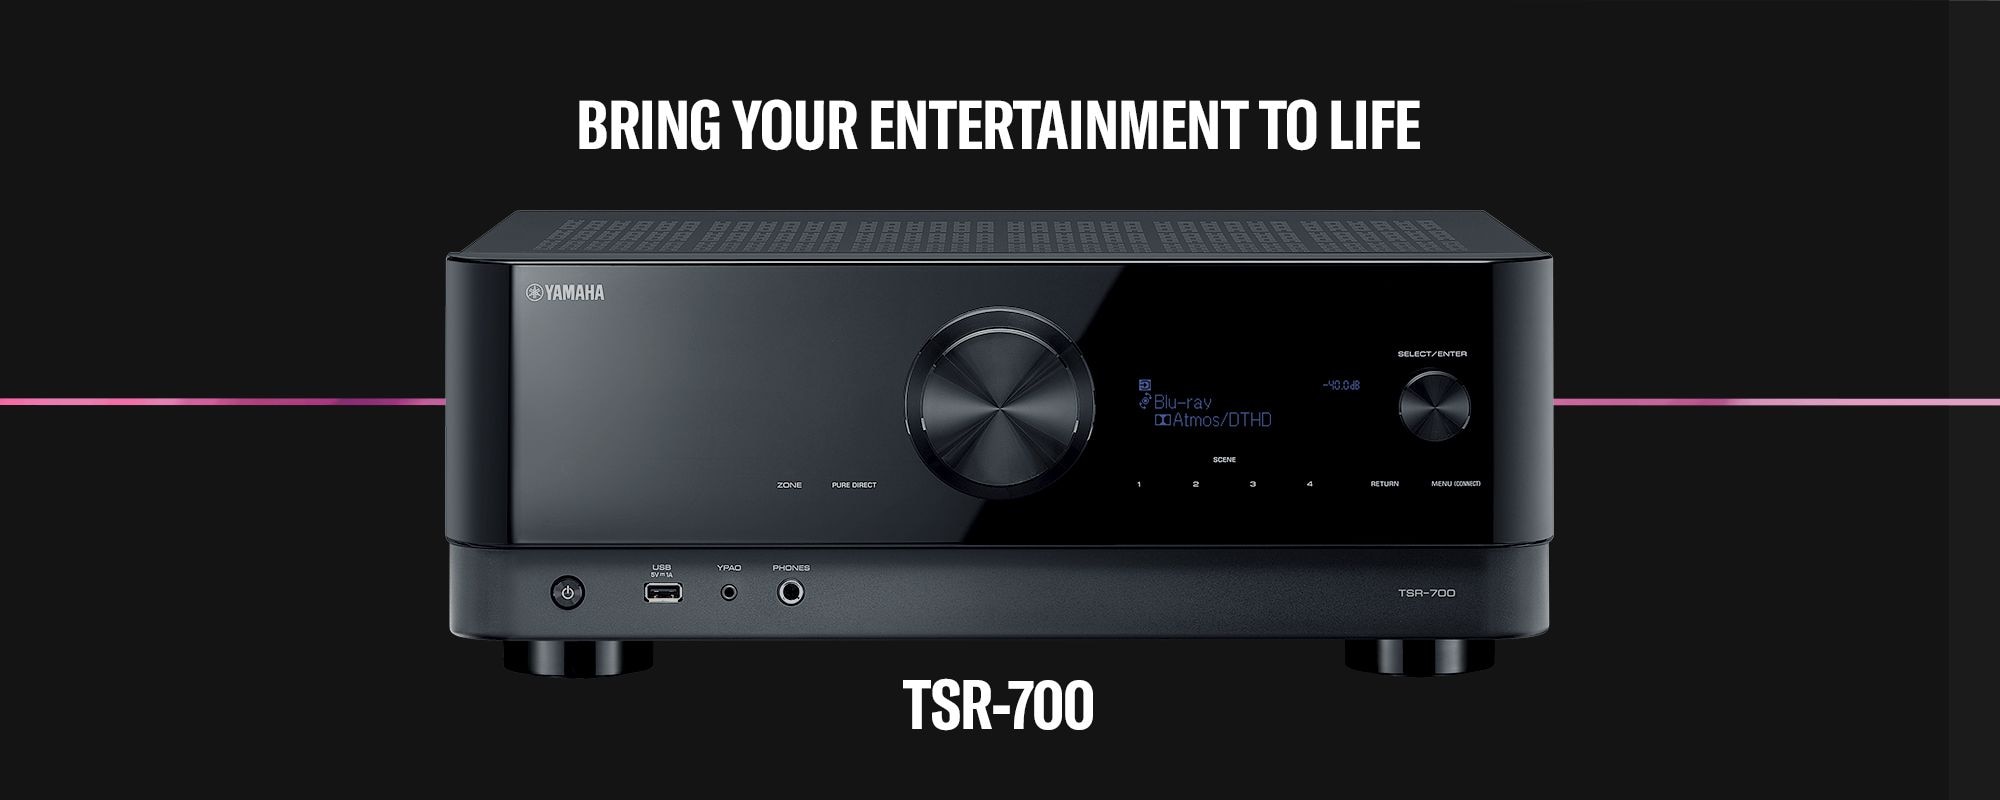 Yamaha TSR-700 Bring Your Entertainment To Life - Header - Desktop